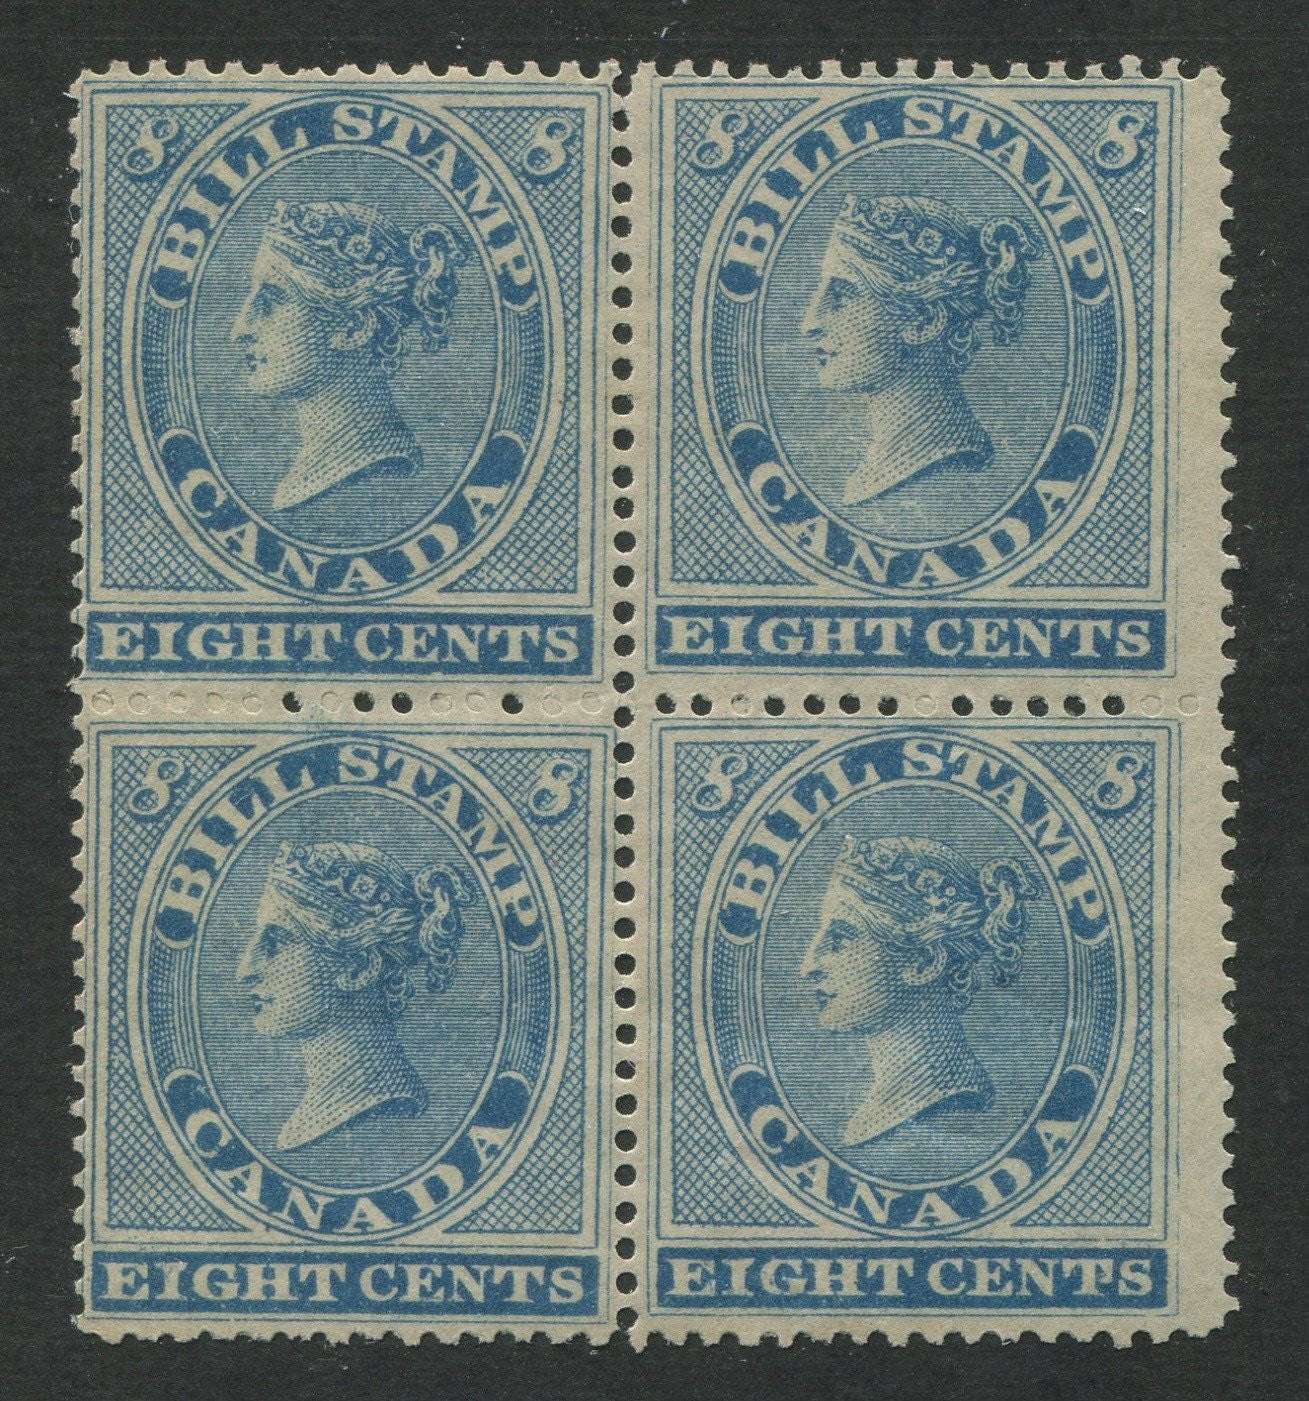 0008FB1707 - FB8 - Mint Block of 4 - Deveney Stamps Ltd. Canadian Stamps